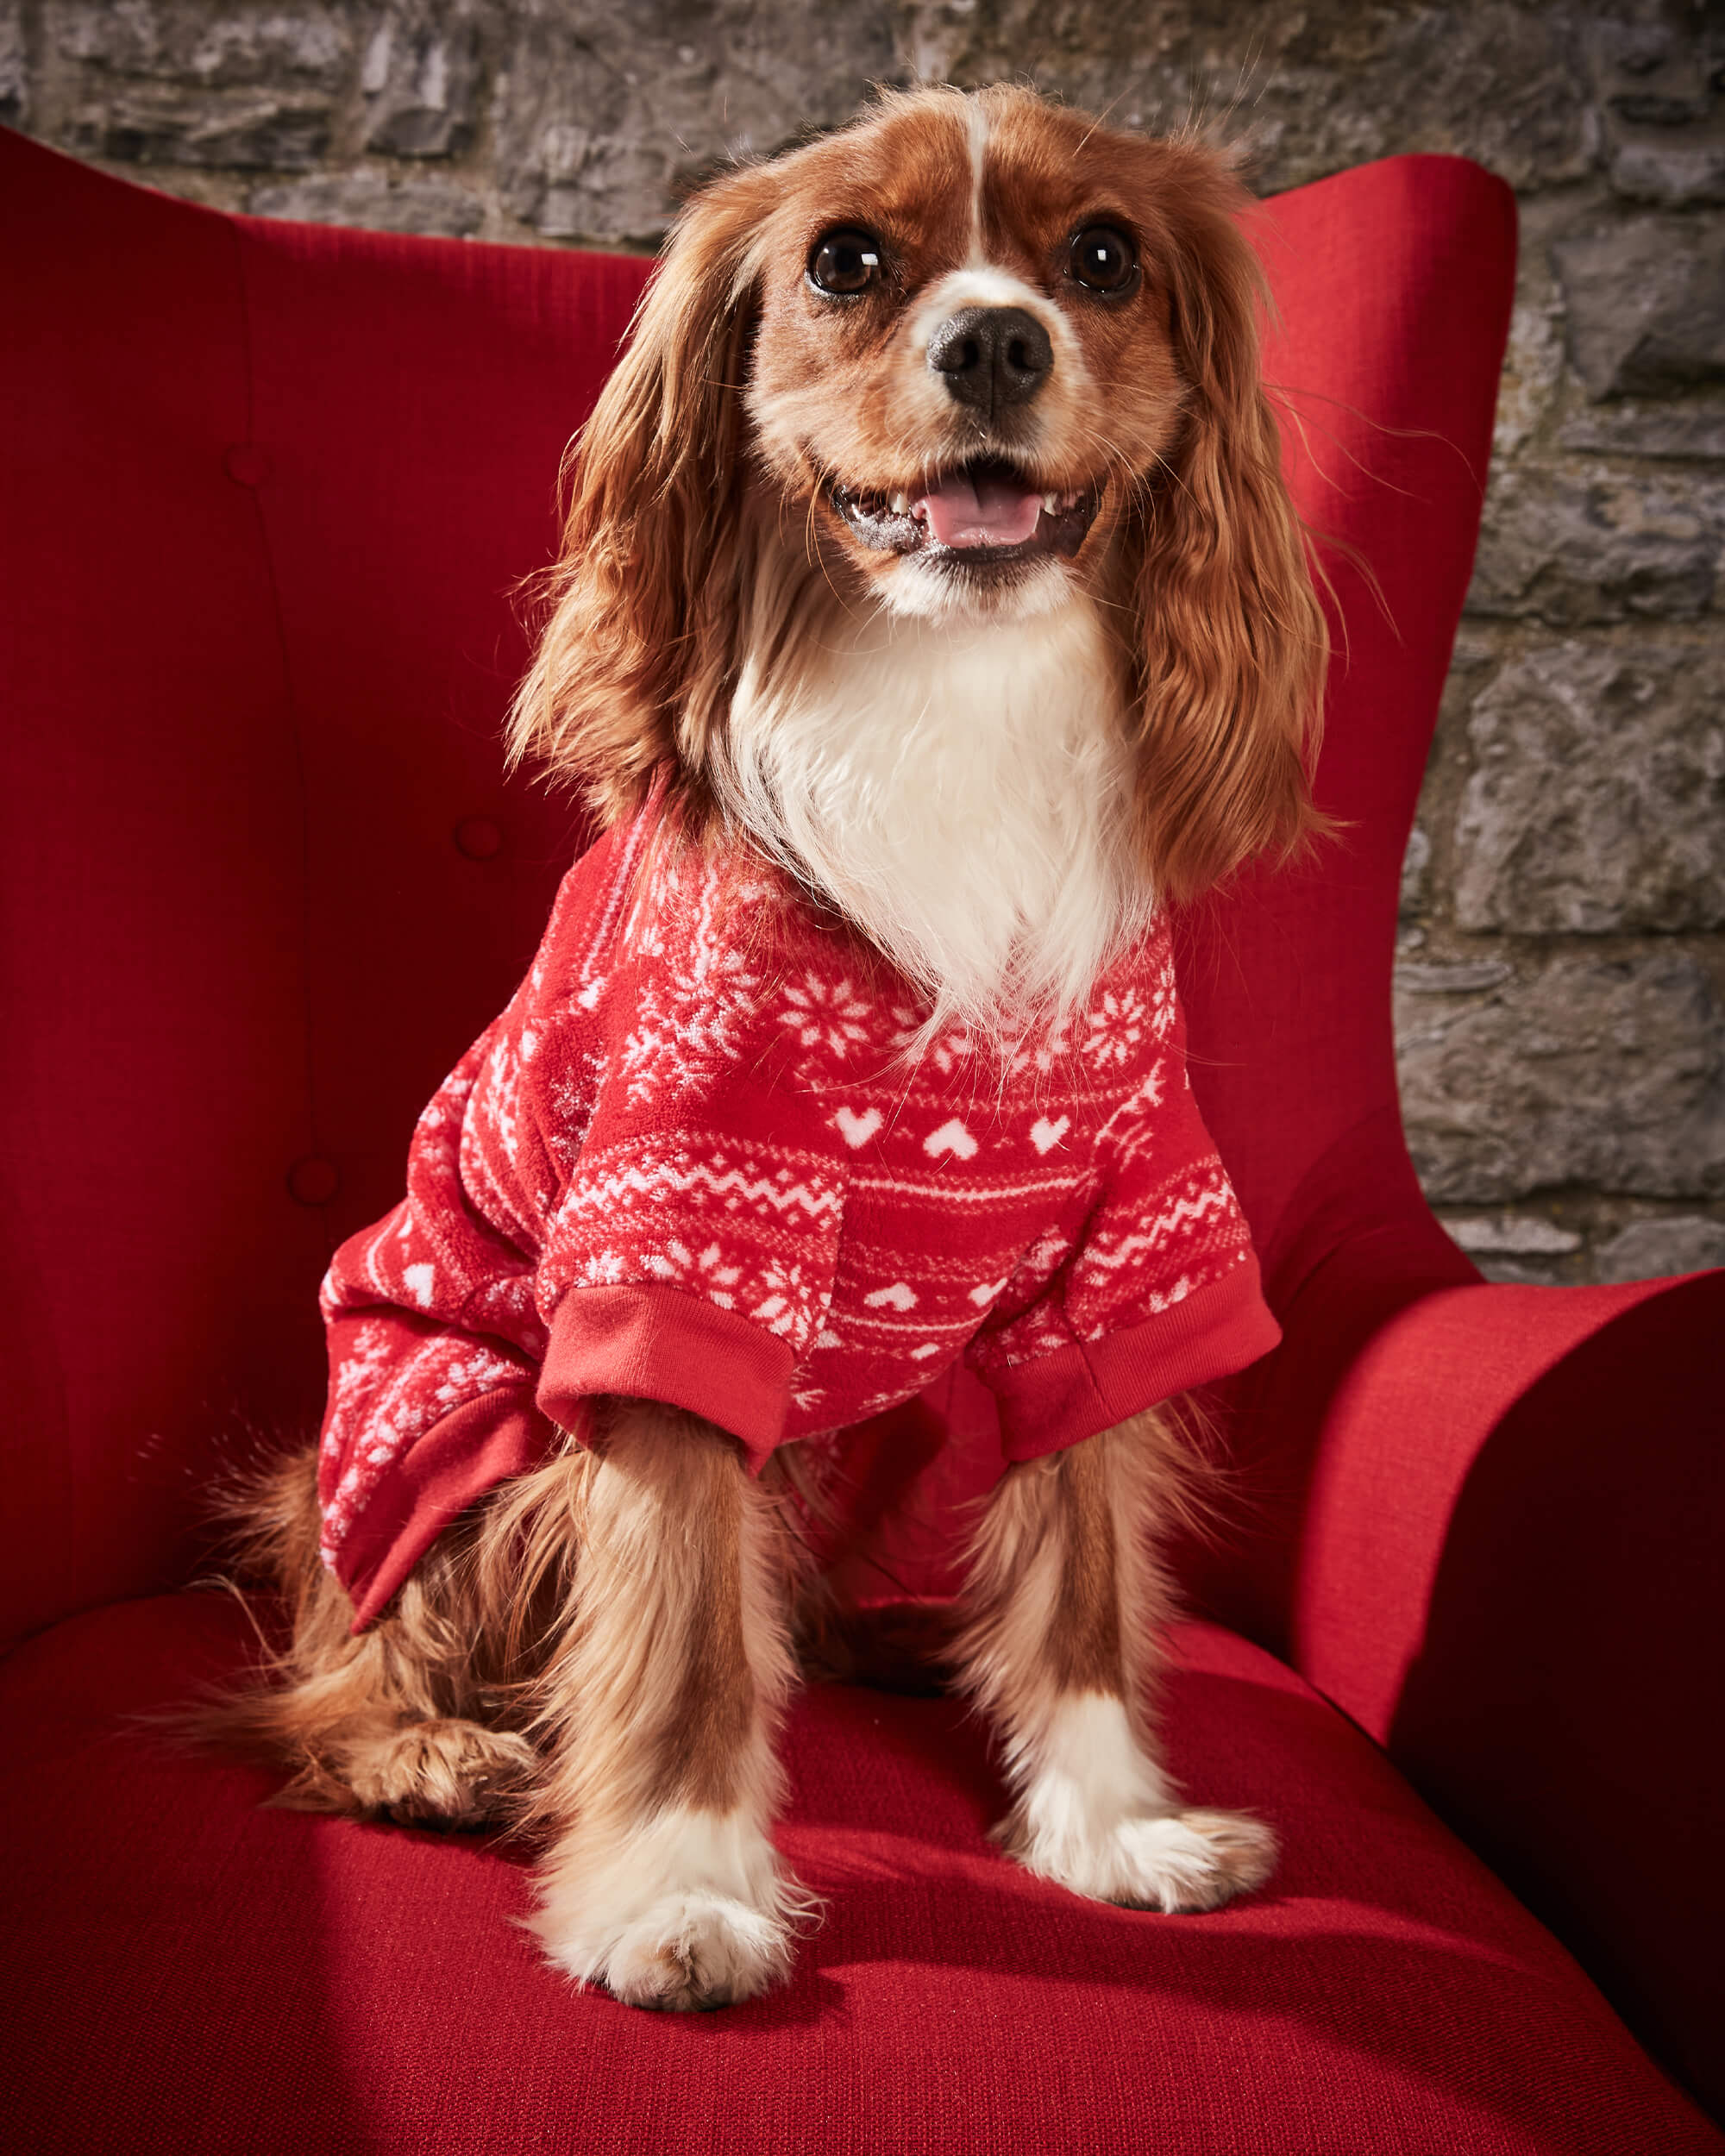 Dog weraing festive red onsie. Sitting in chair. 